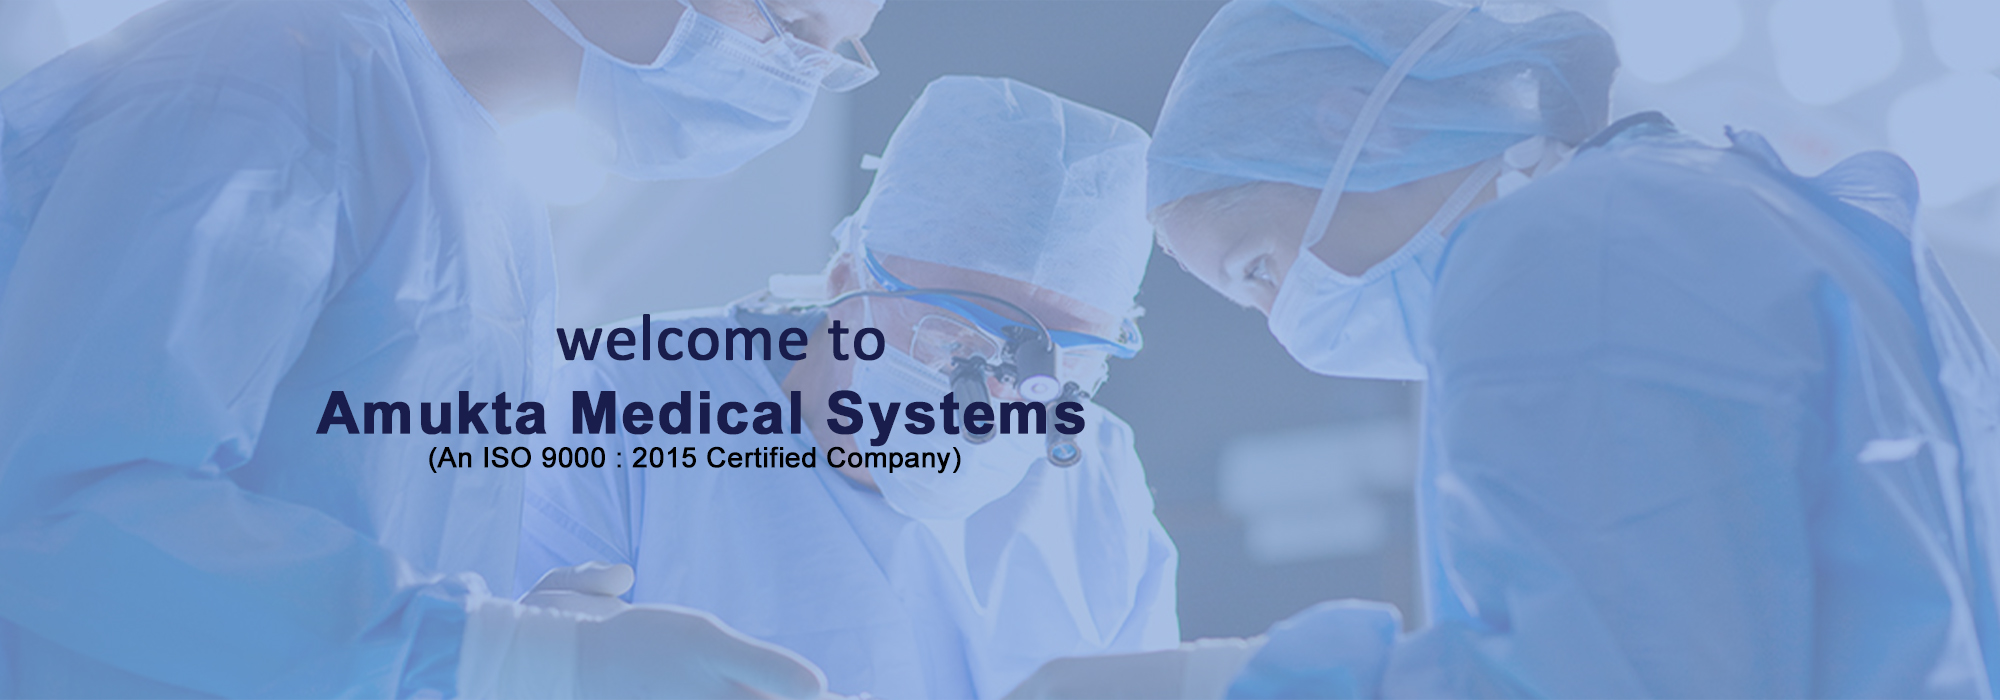 Amukta Medical Systems